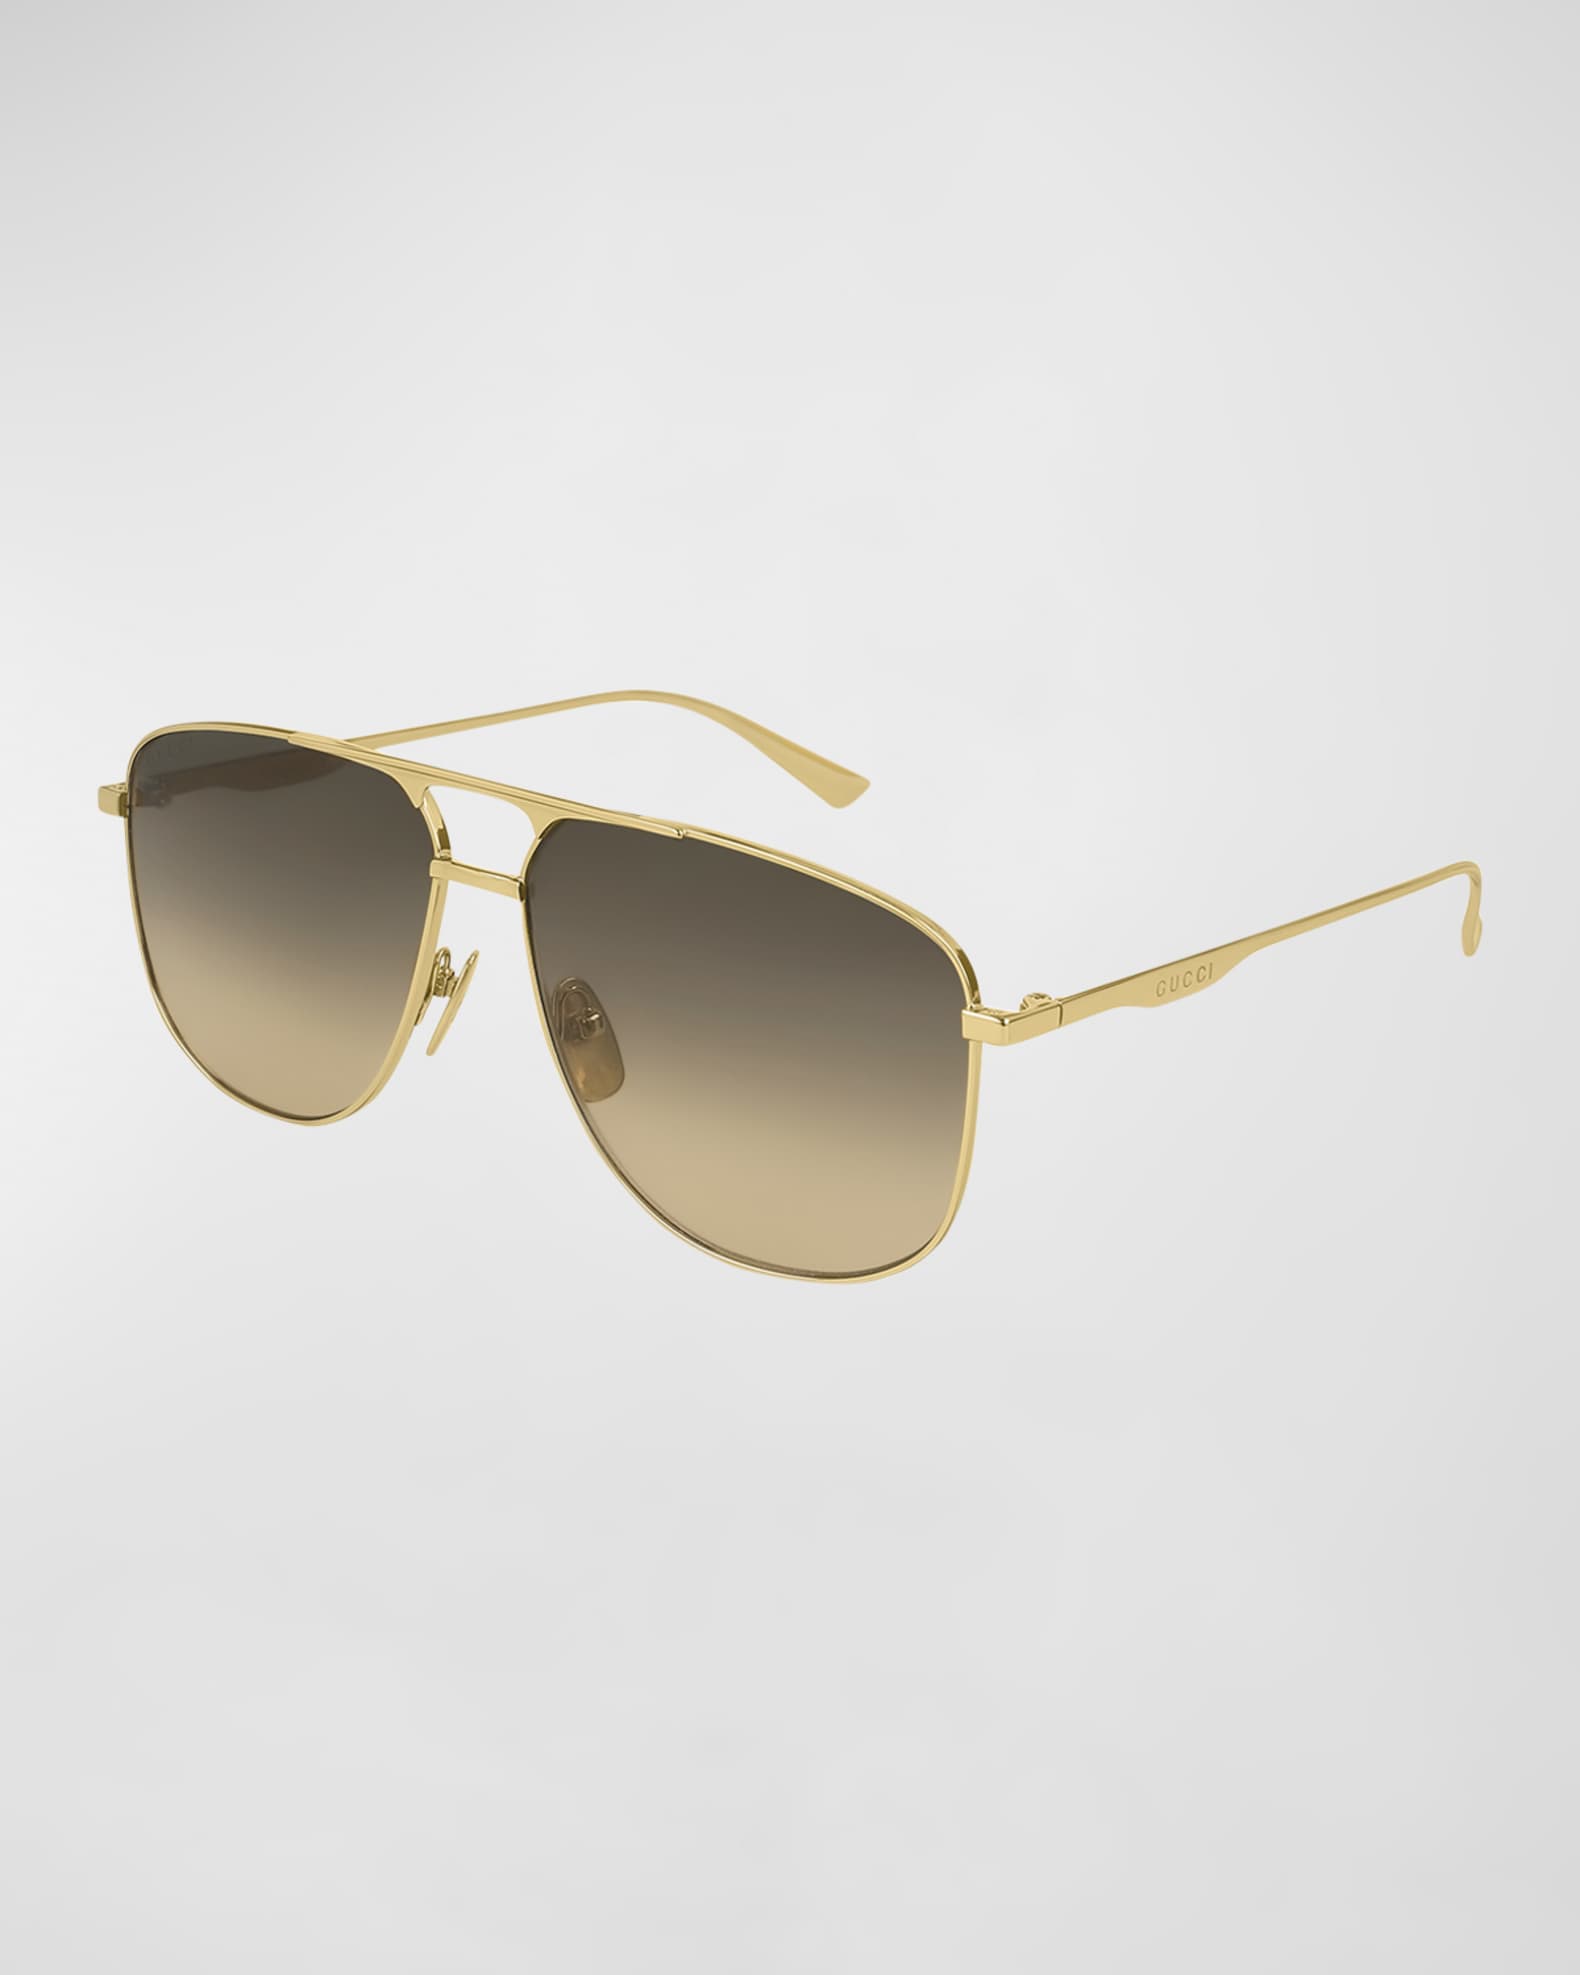 Louis Vuitton 2020 The Party Sunglasses - Gold Sunglasses